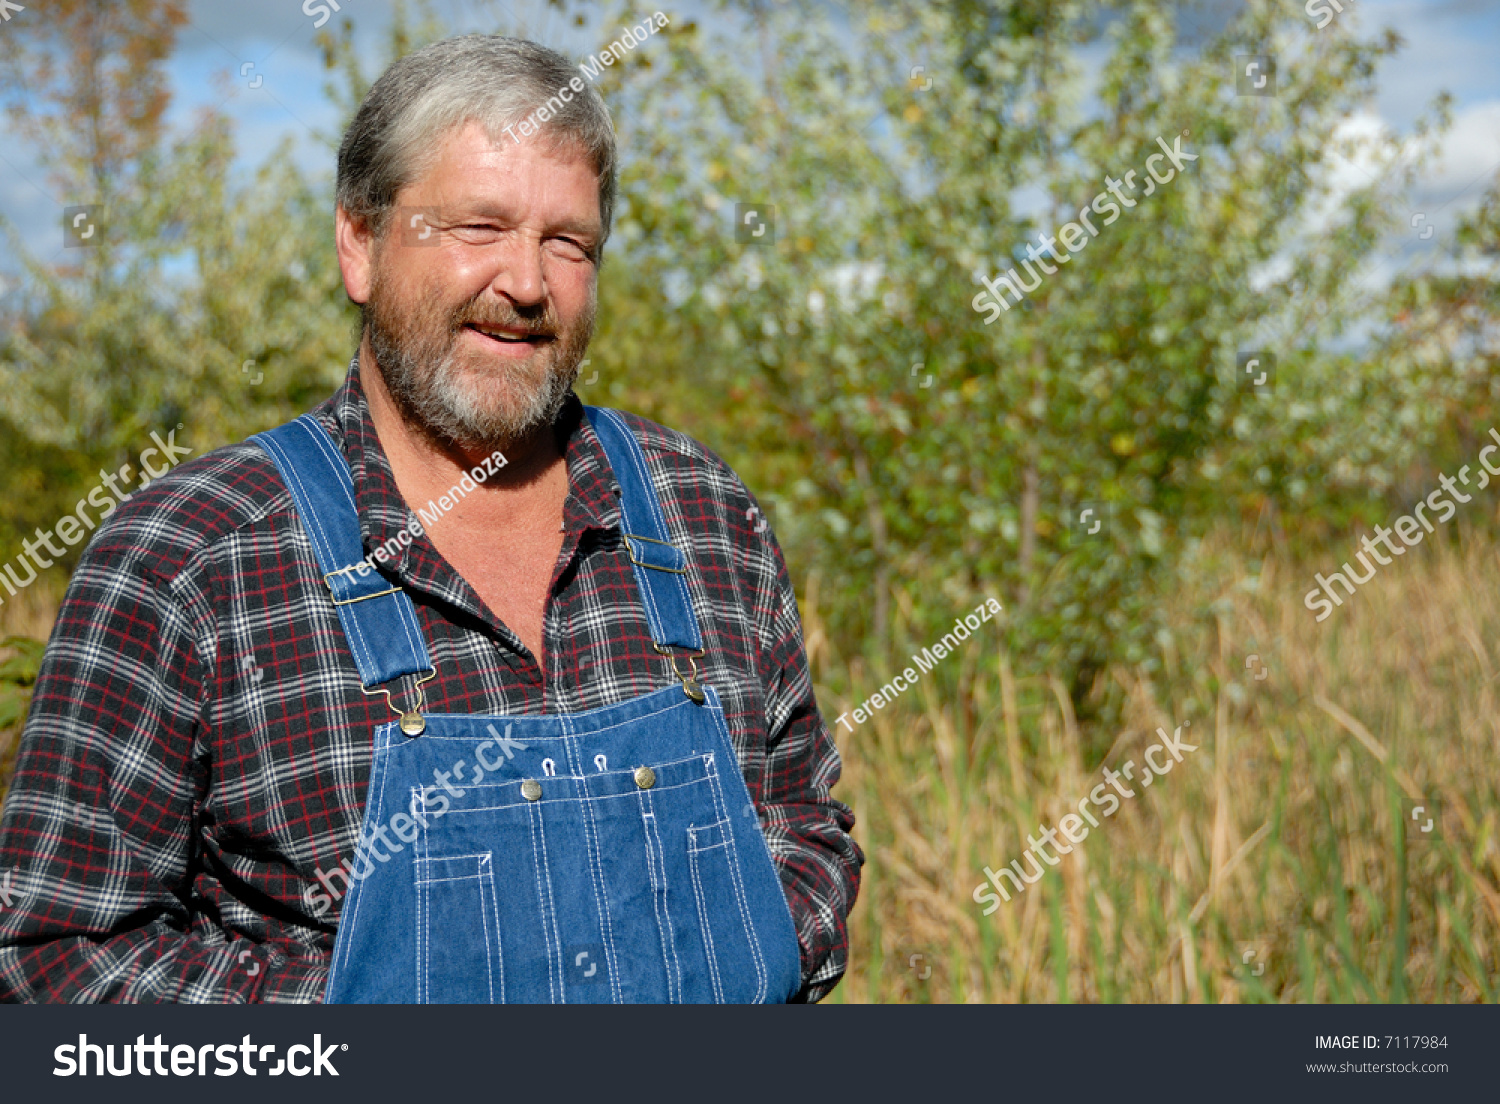 Farmer Smiling In Plaid Shirt & Bib Overalls Stock Photo 7117984 ...